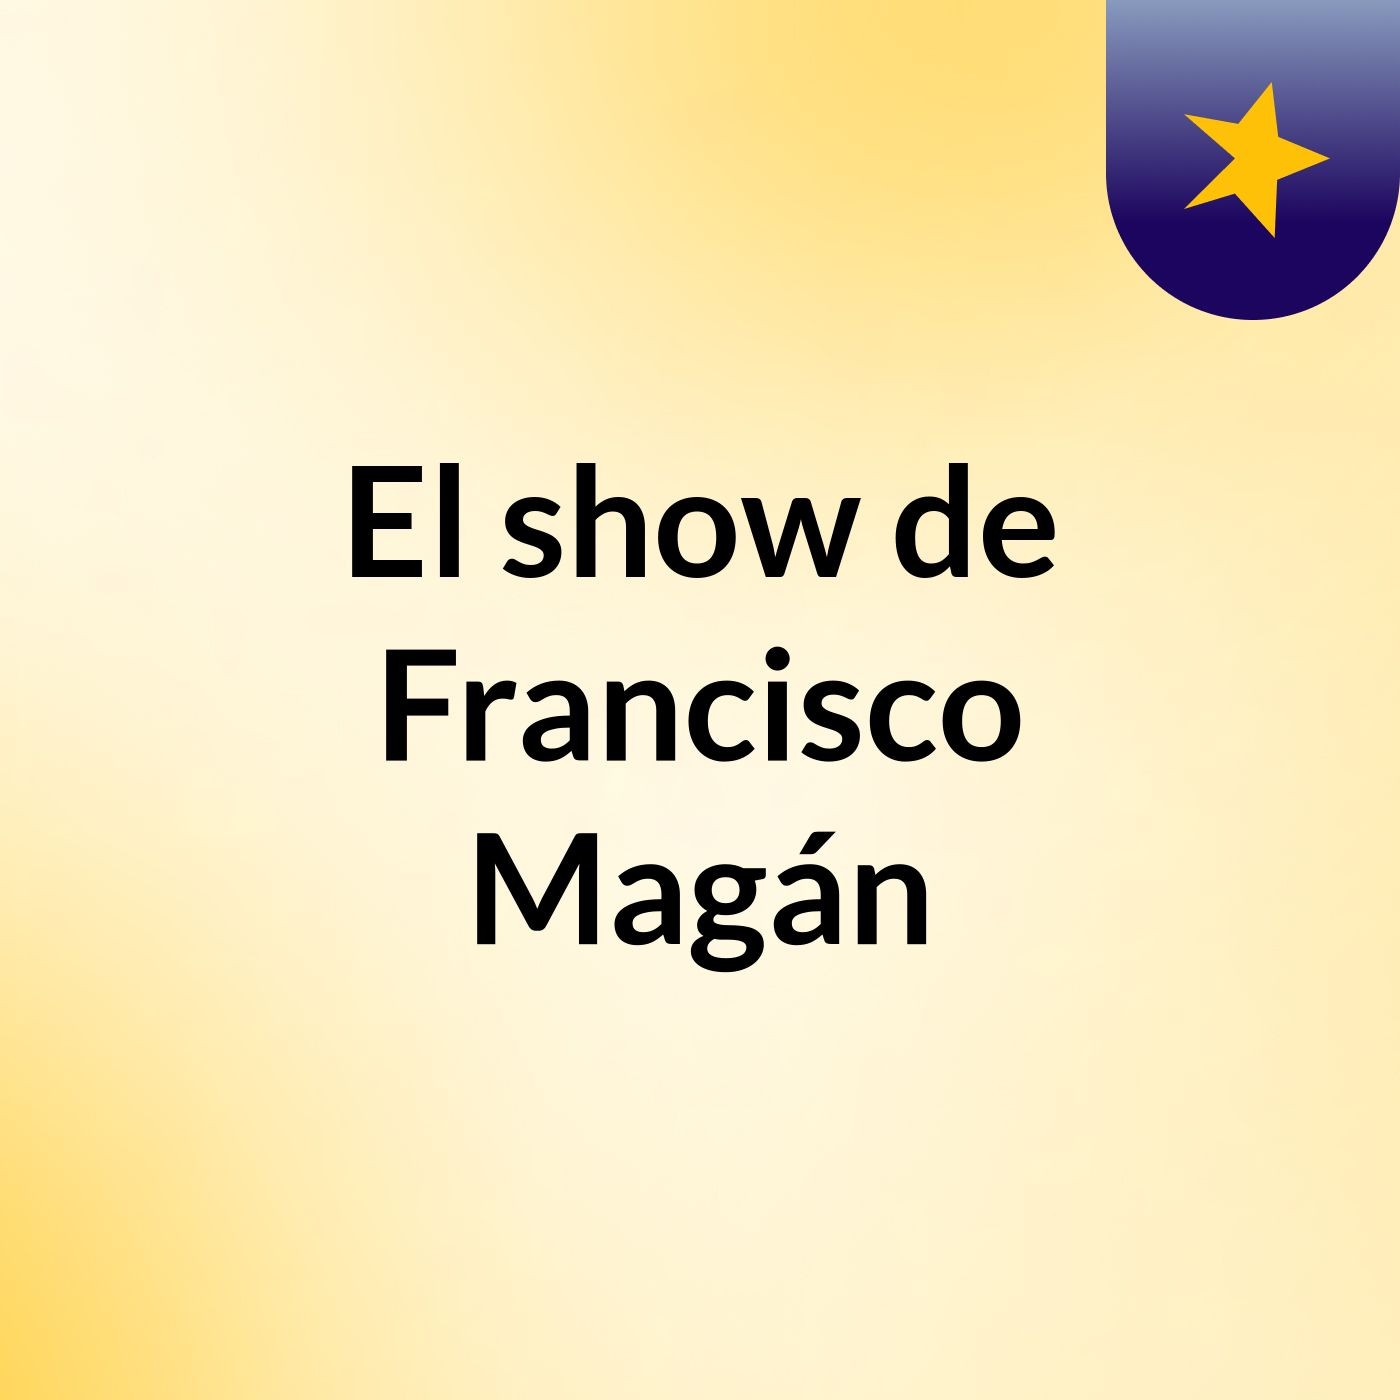 El show de Francisco Magán